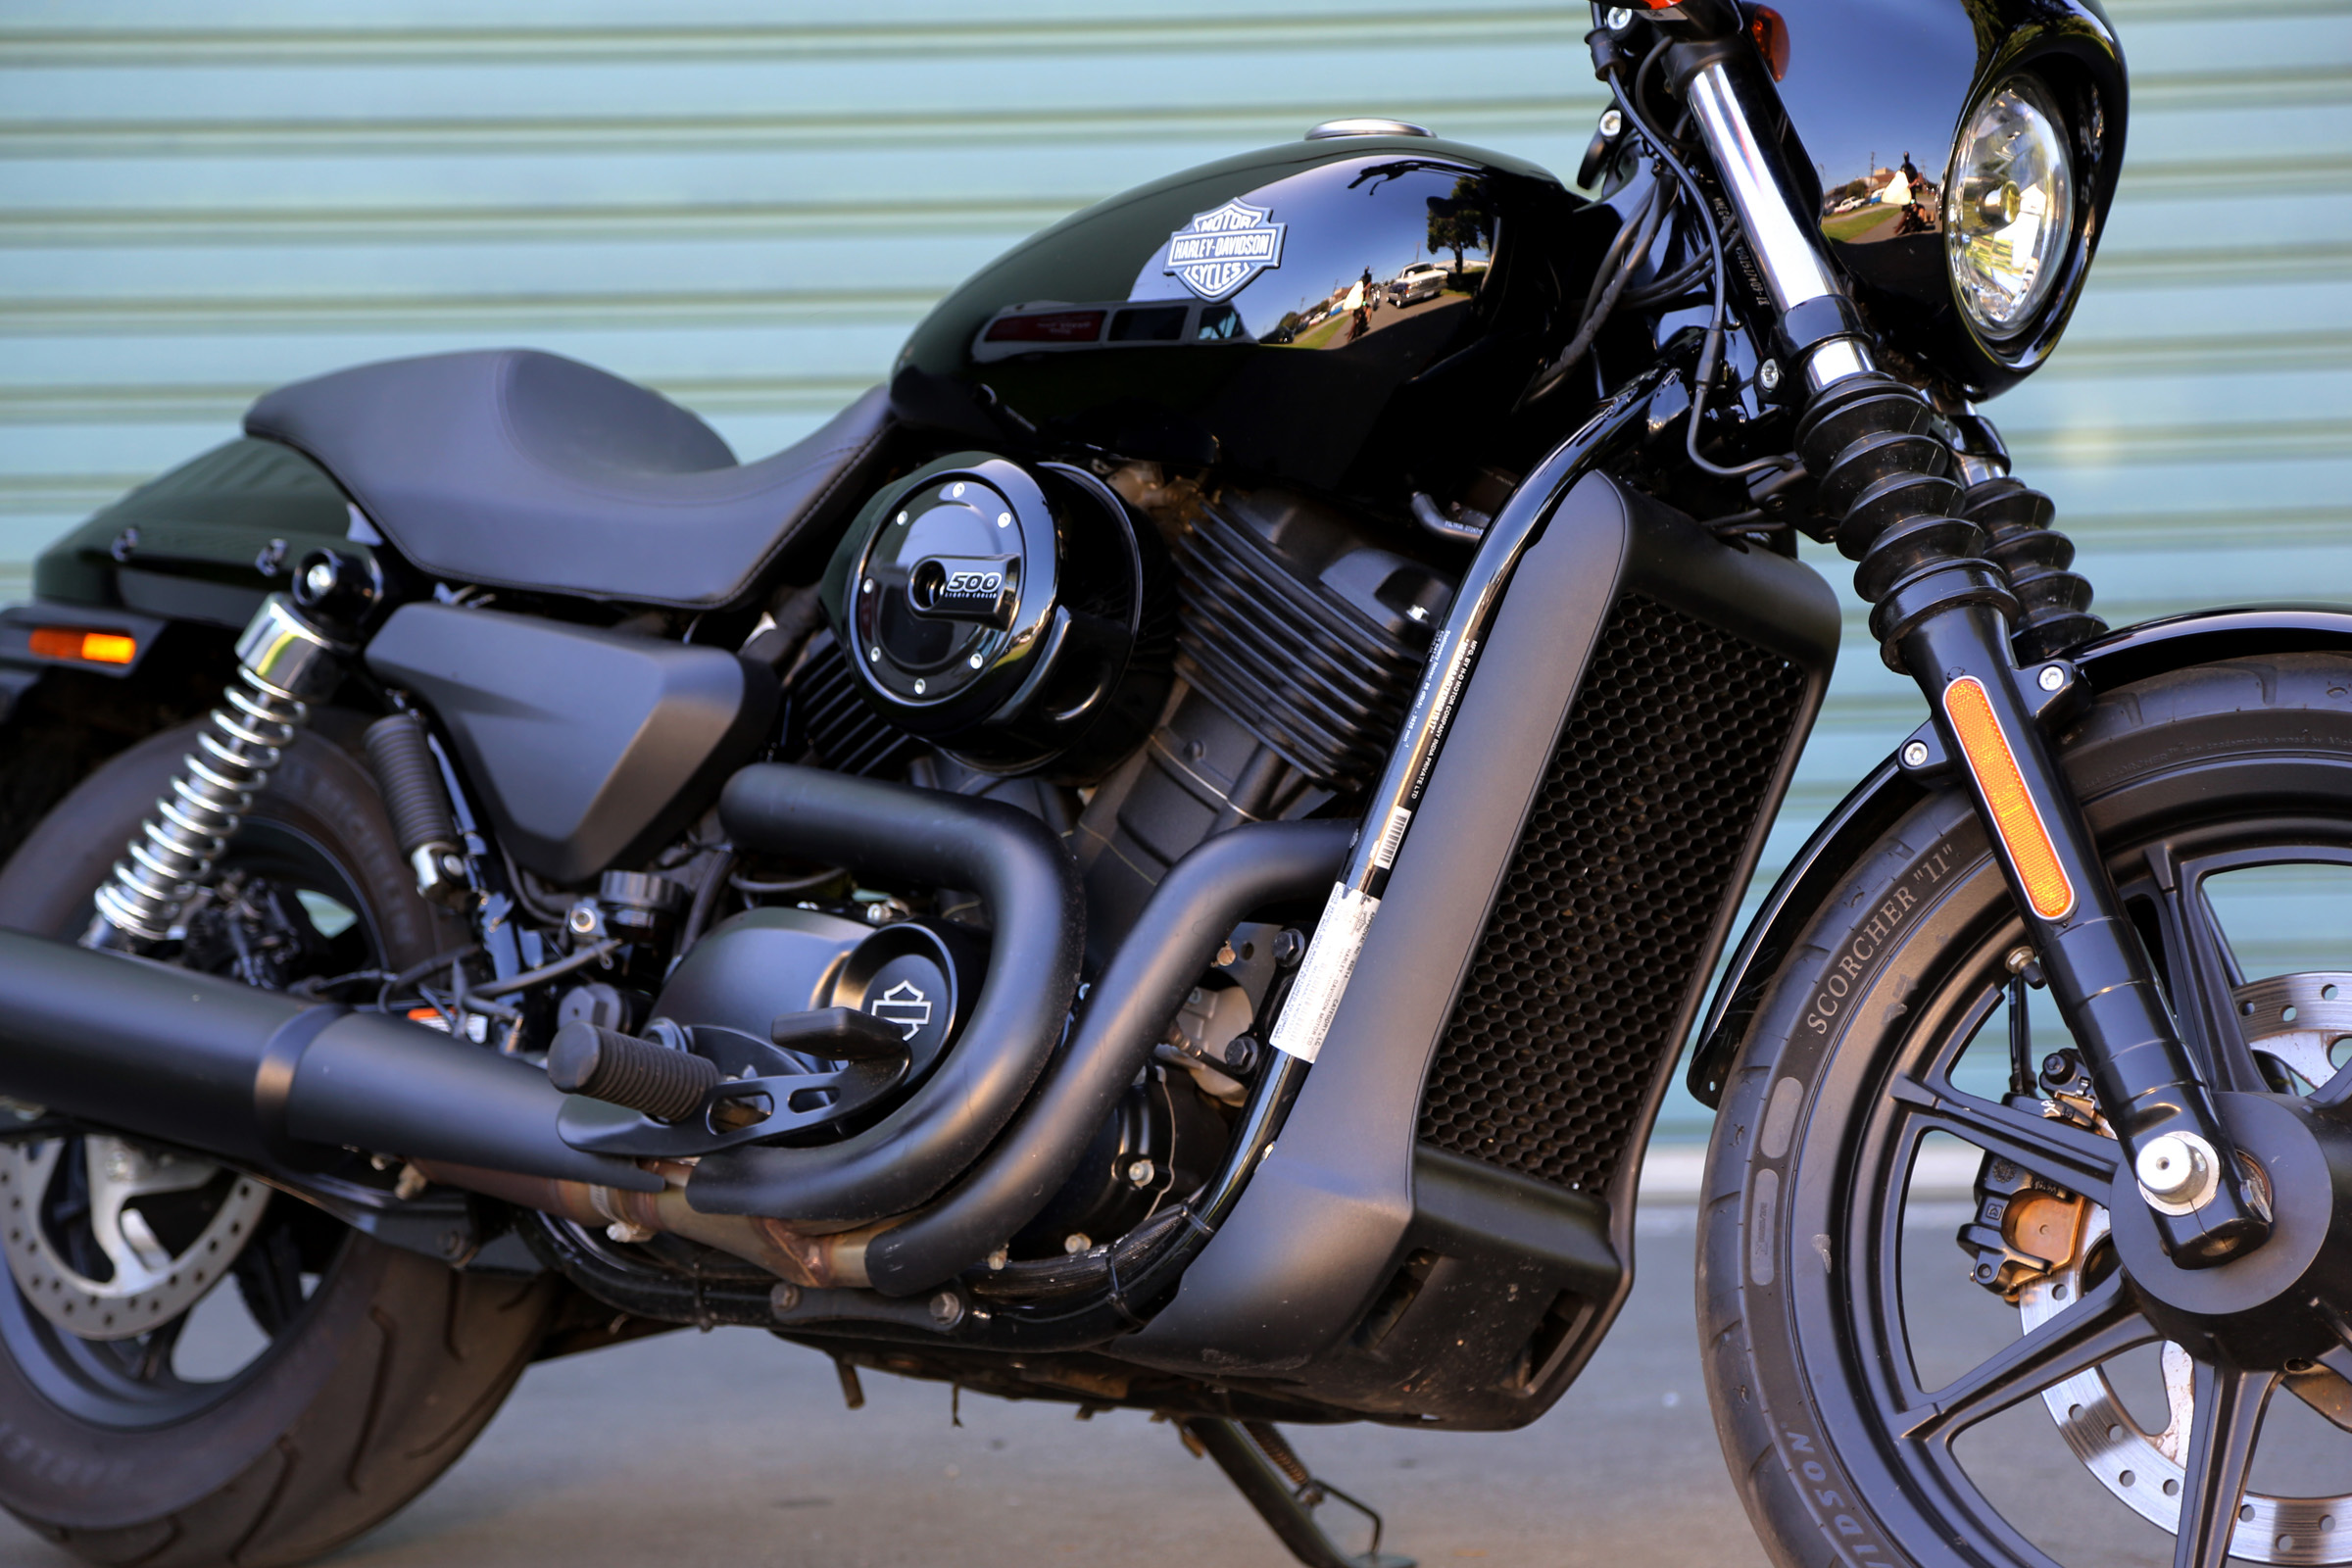 2019 Harley Davidson Street 500 XG500 detail6